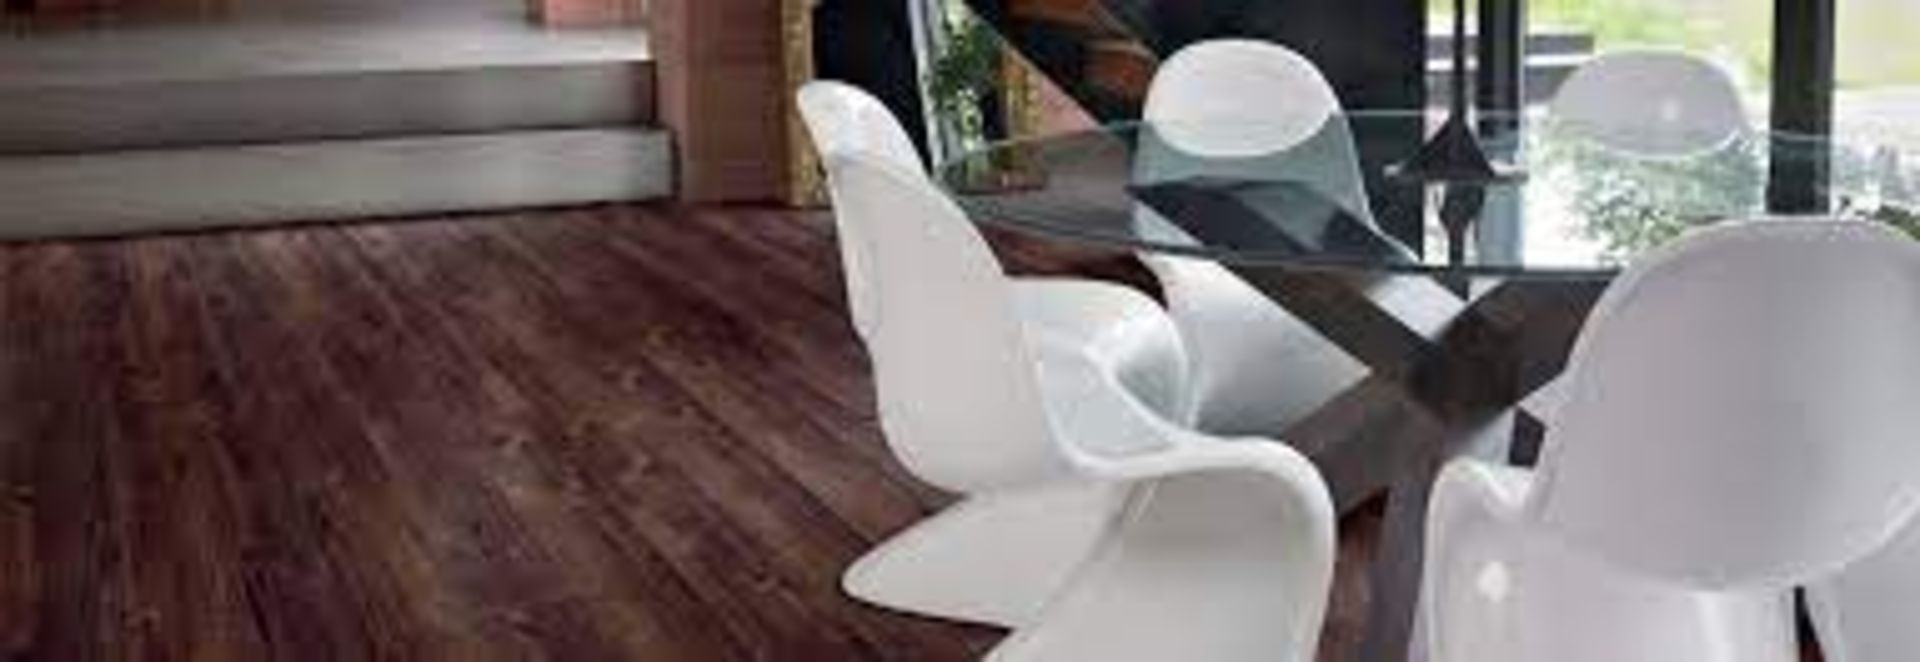 Pallet To Contain 100m2 of New Boxed Amtico Aged Cedar Wood Luxury Vinyl Flooring. RRP £50 per m2.